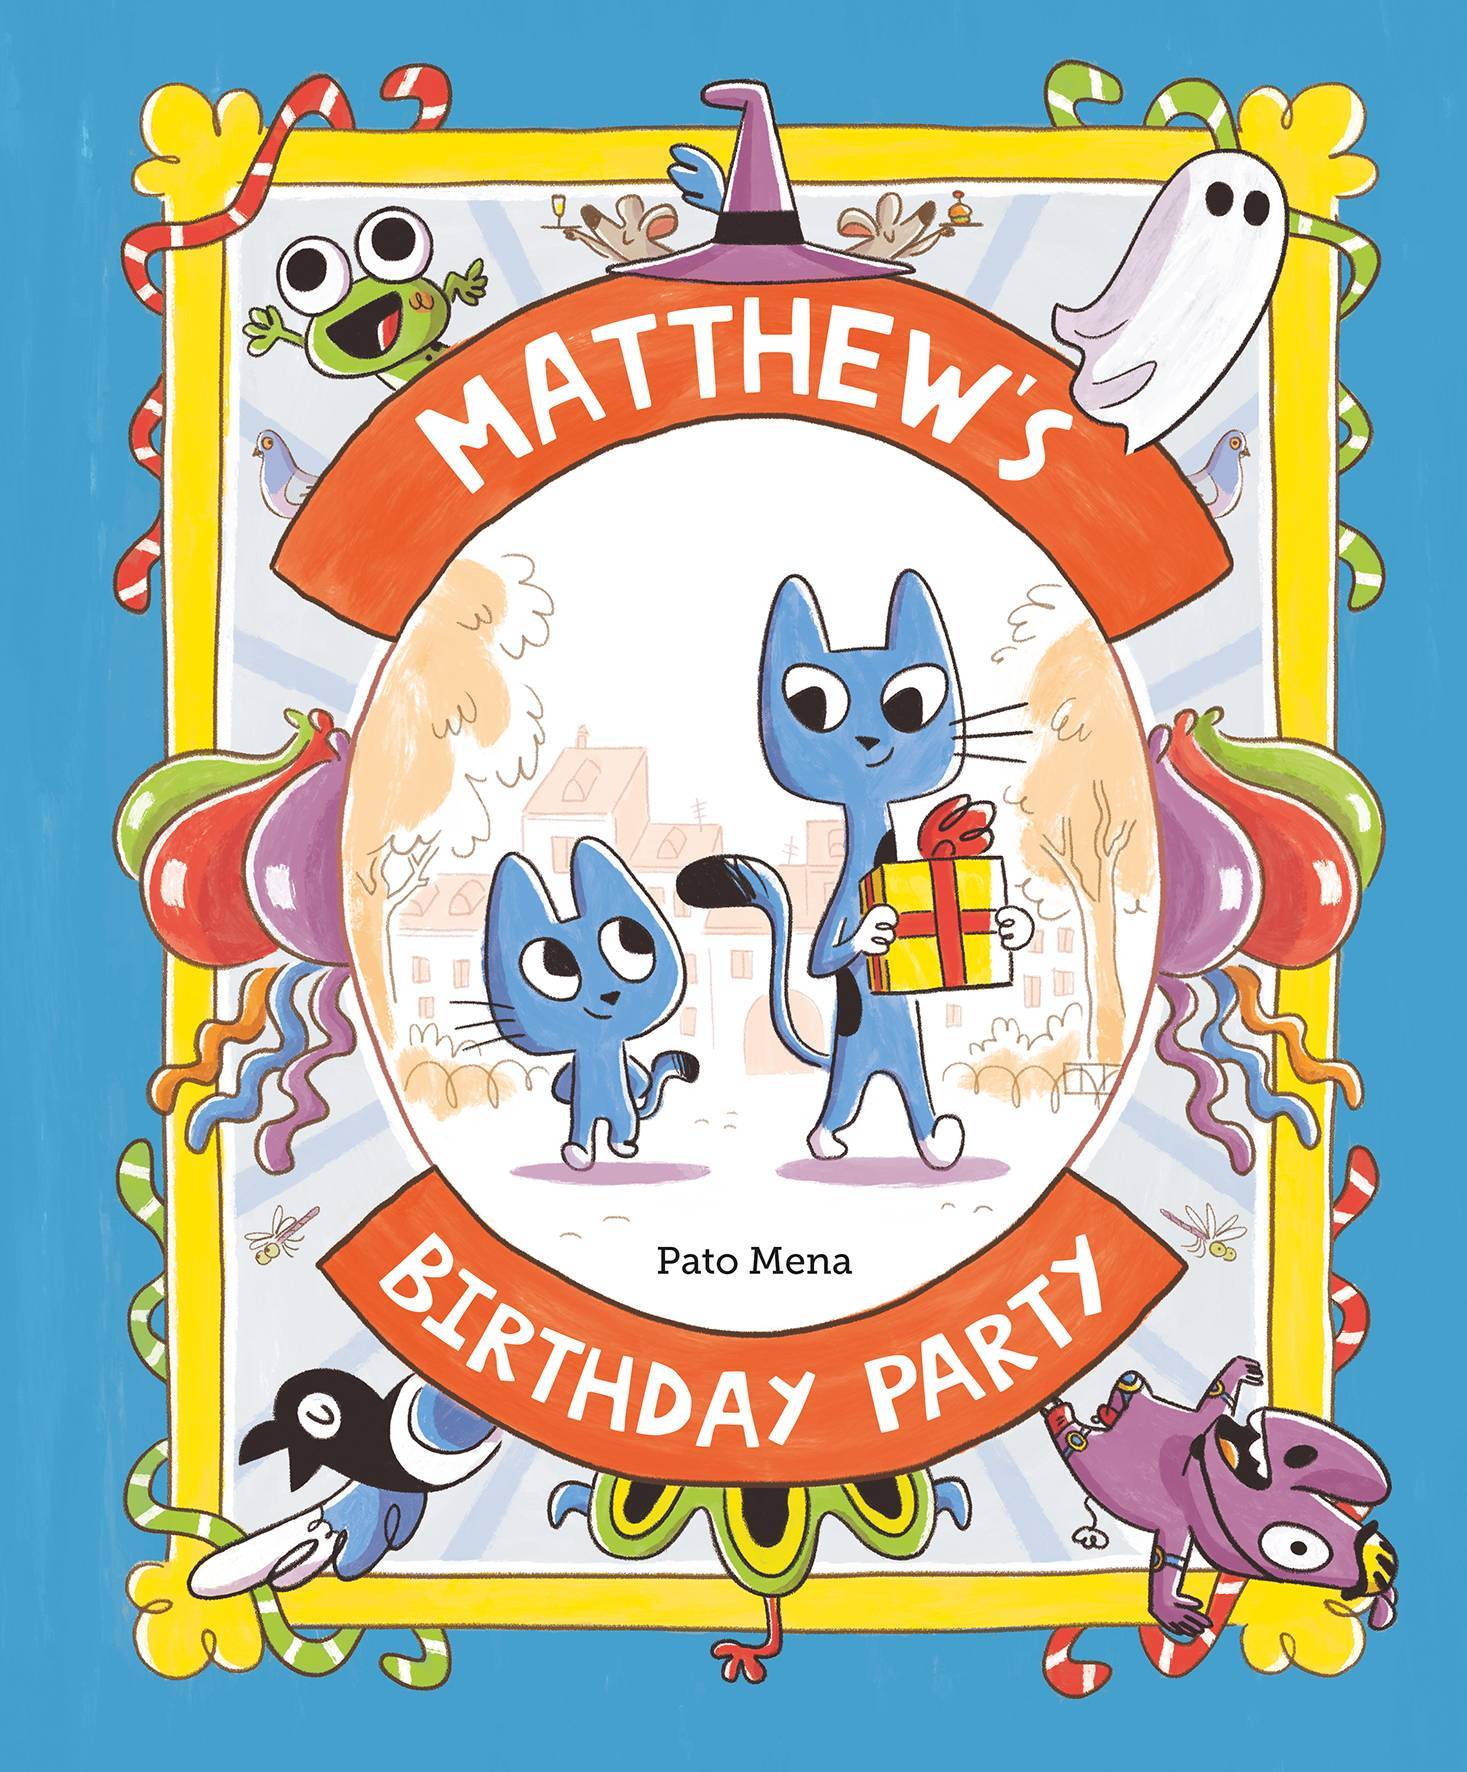 Matthew’s Birthday Party